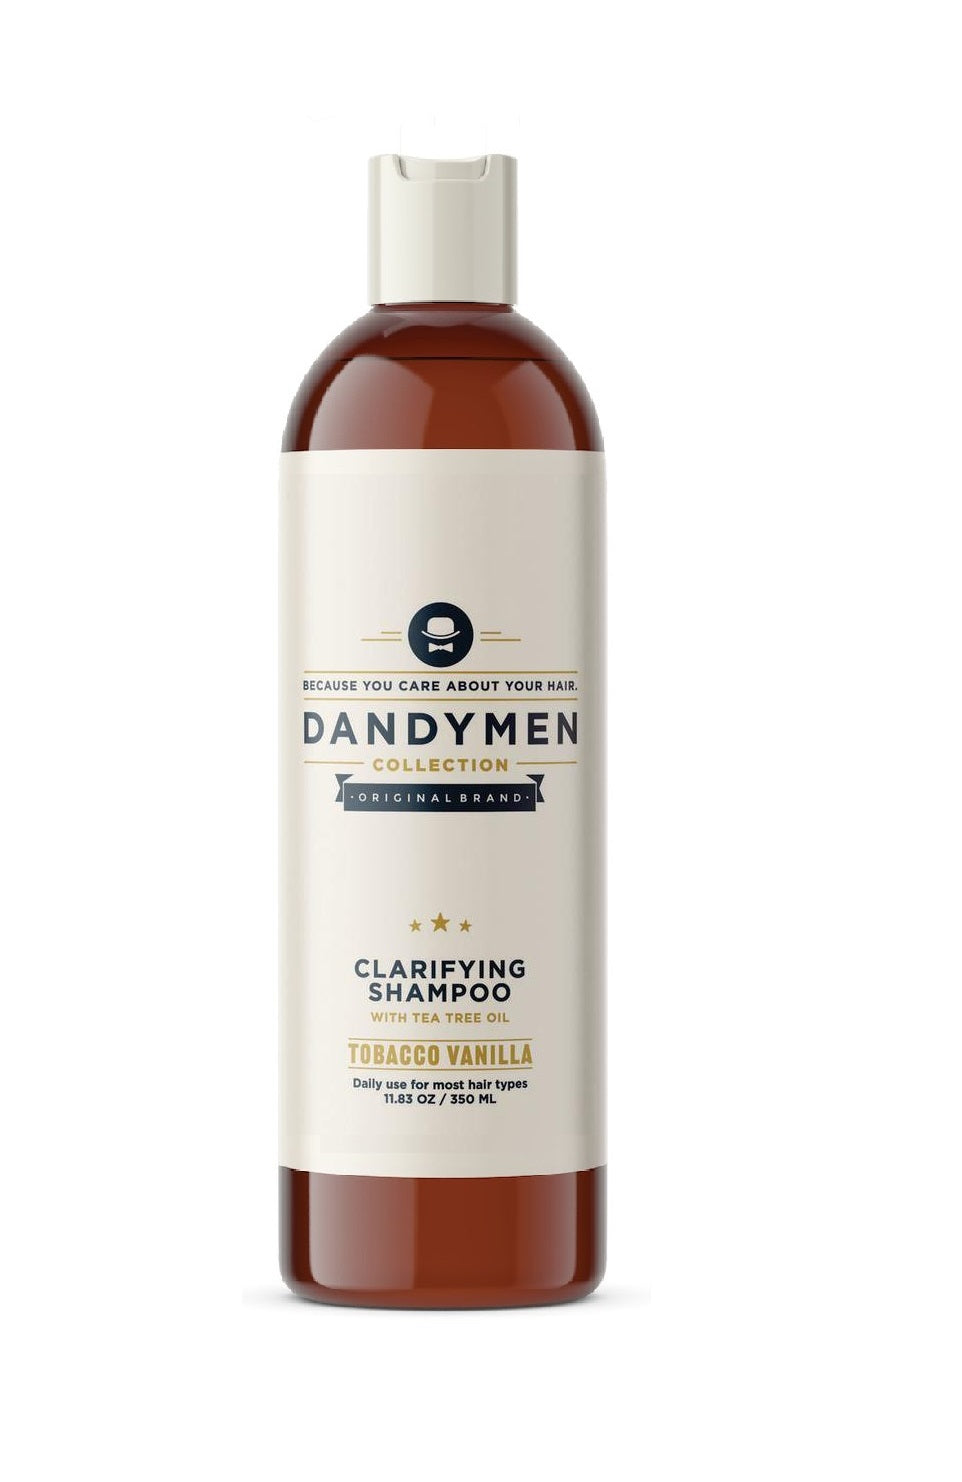 Dandymen Clarifying Shampoo with Tea Tree Oil 11.83 oz